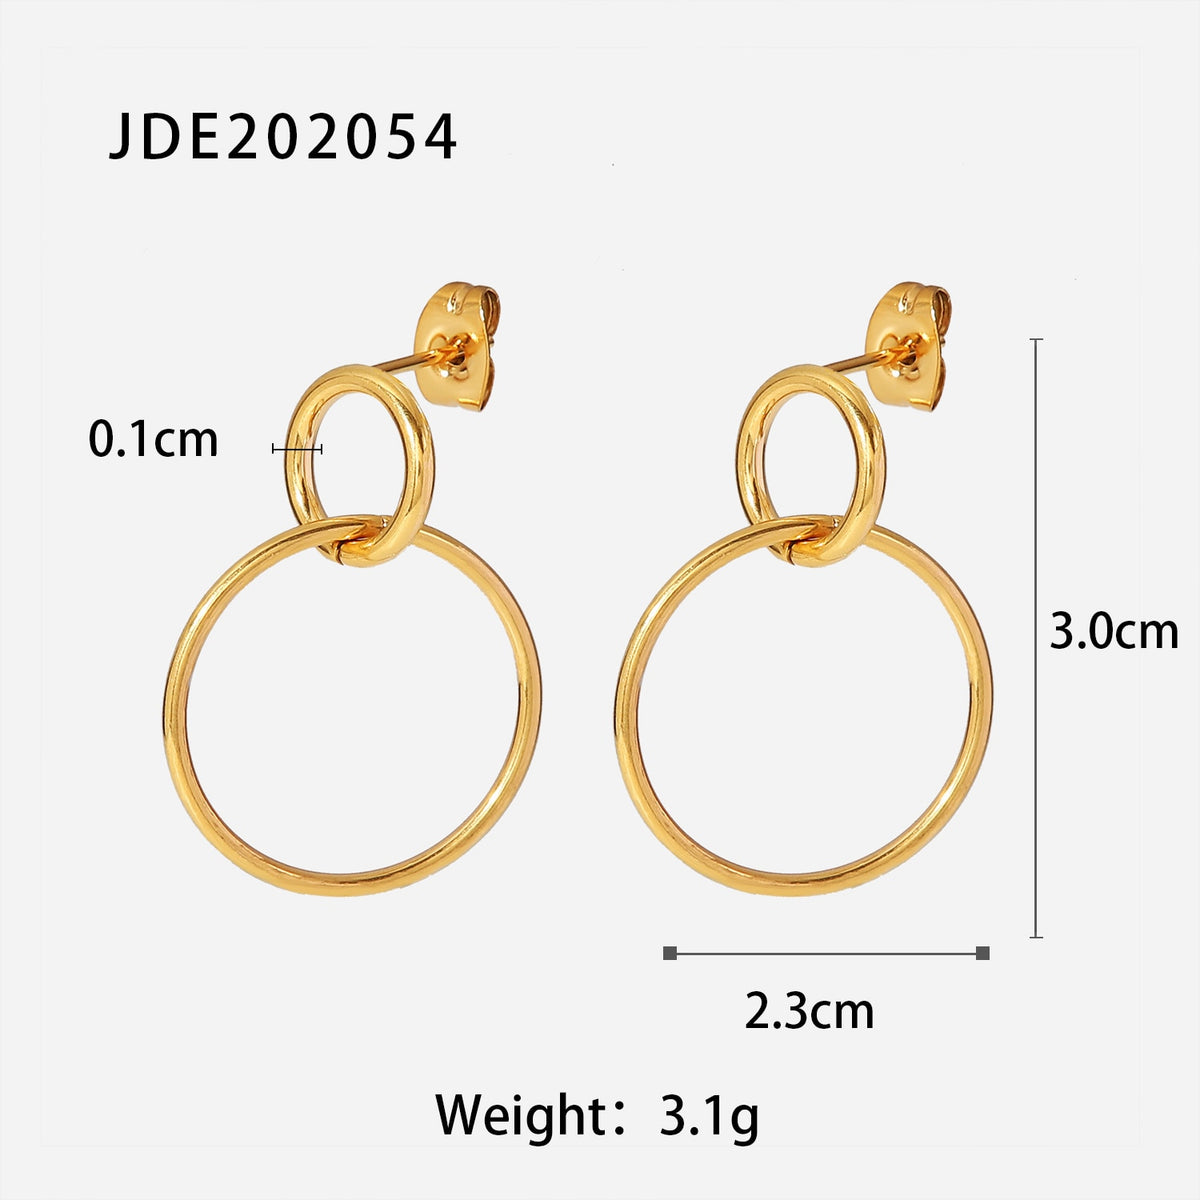 Double Size Ring Staggered Hoop Earrings Stainless Steel 18K Gold Plated Waterproof Jewelry Earrings For Women